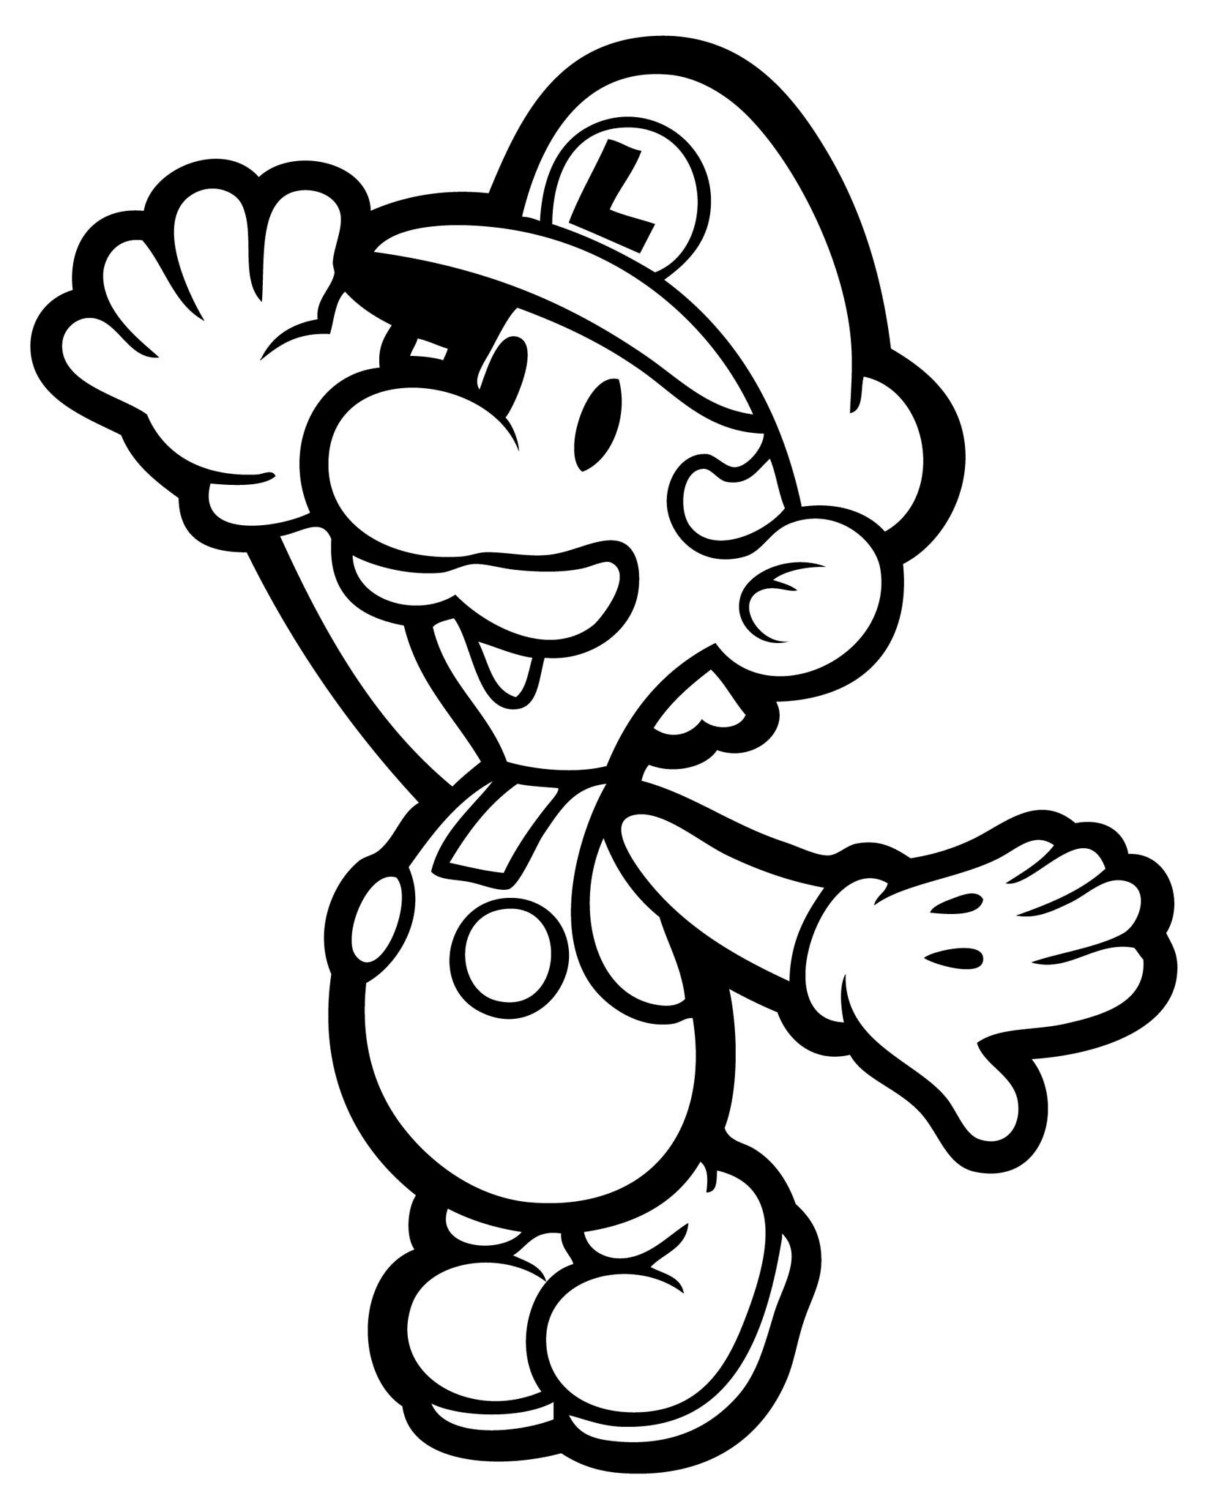 Coloring page: Super Mario Bros (Video Games) #153713 - Printable coloring pages